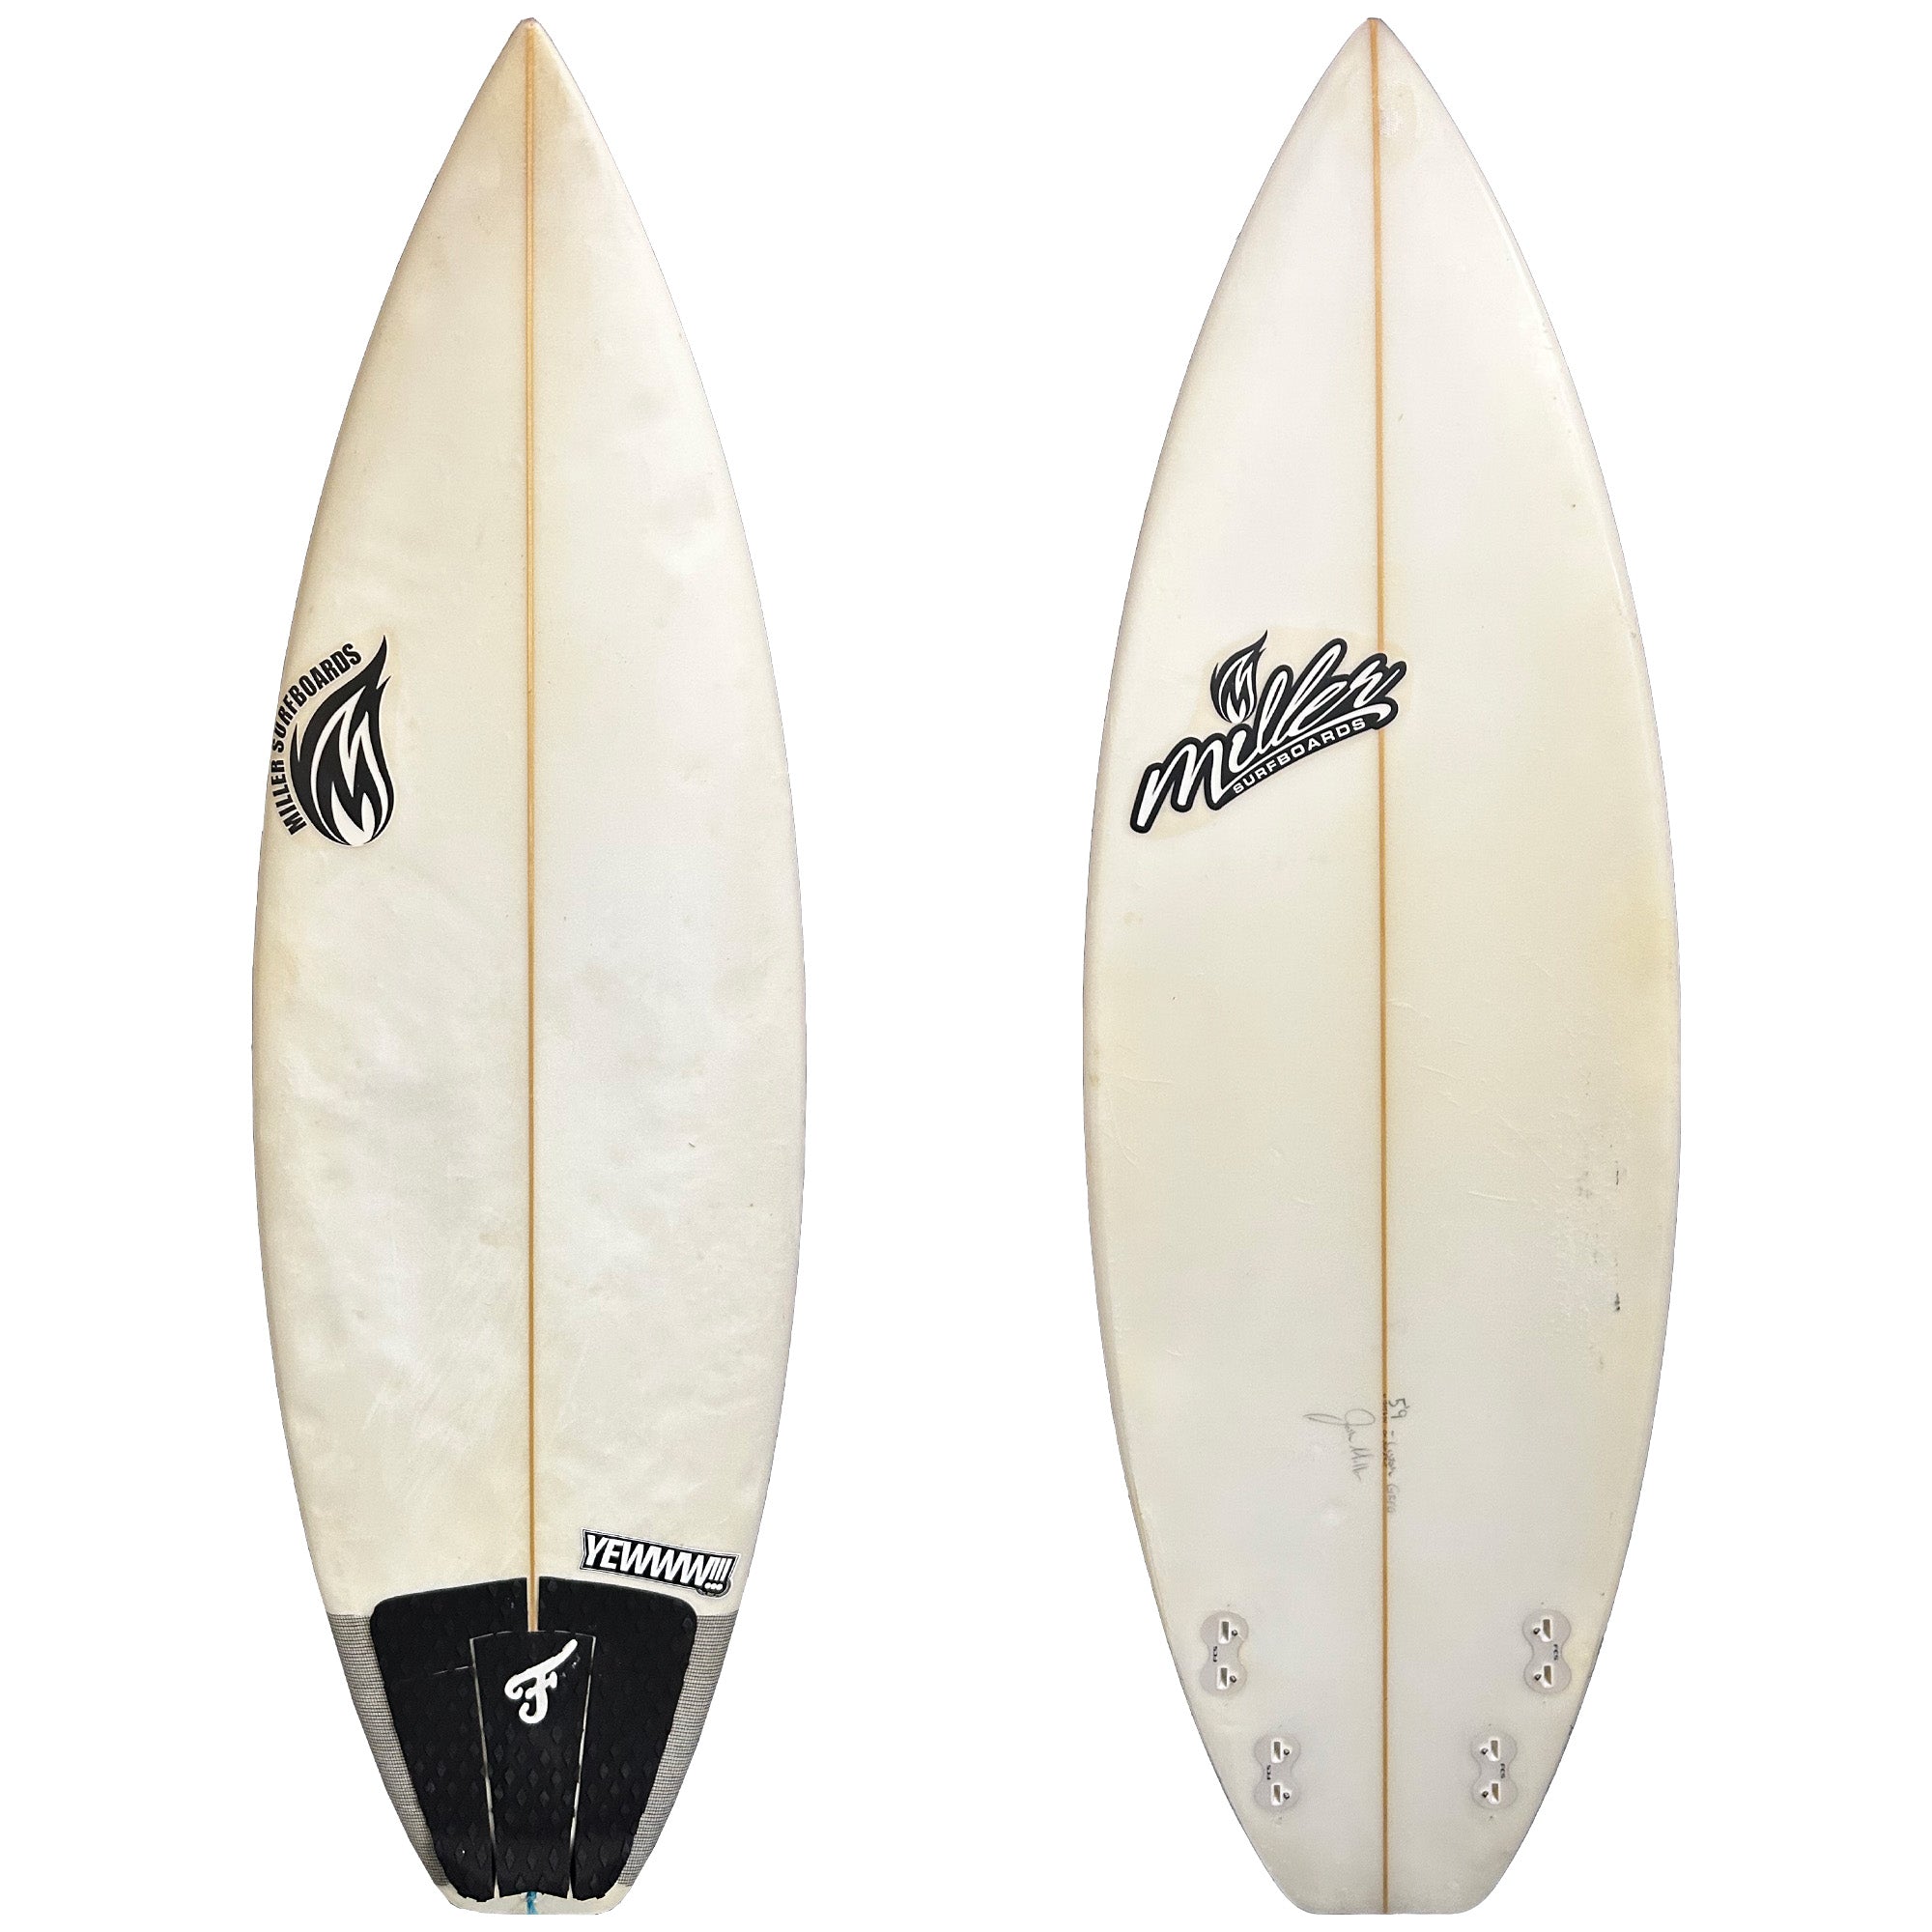 Miller Surfboards 5'9 Consignment Surfboard